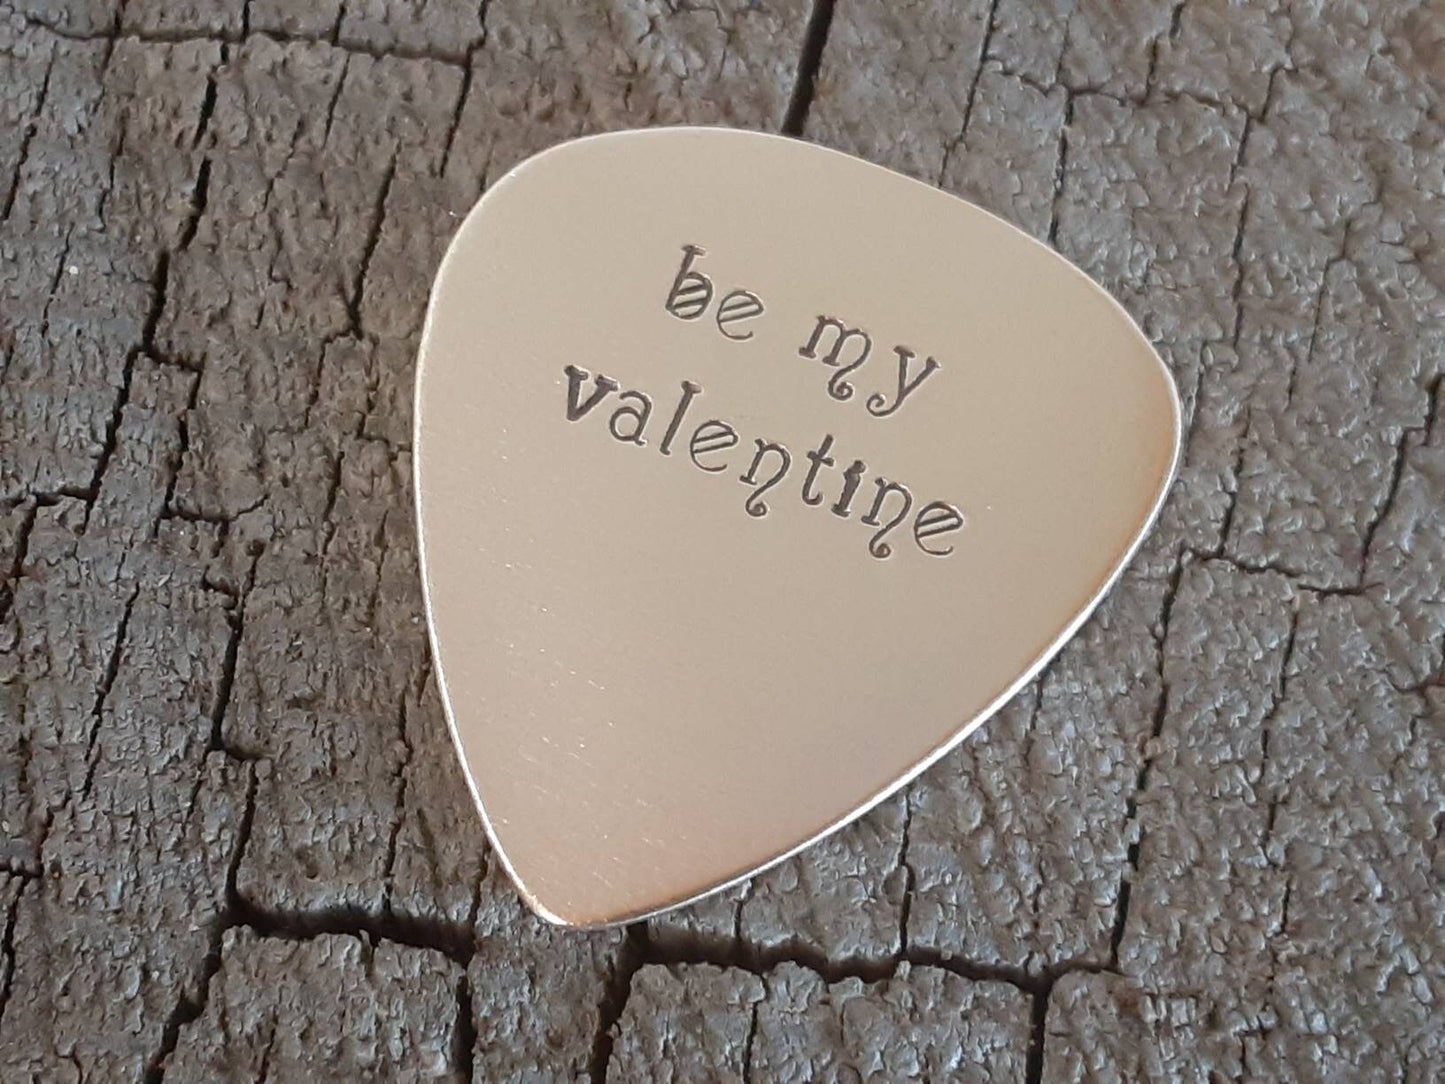 Be my Valentine bronze guitar pick for valentines day